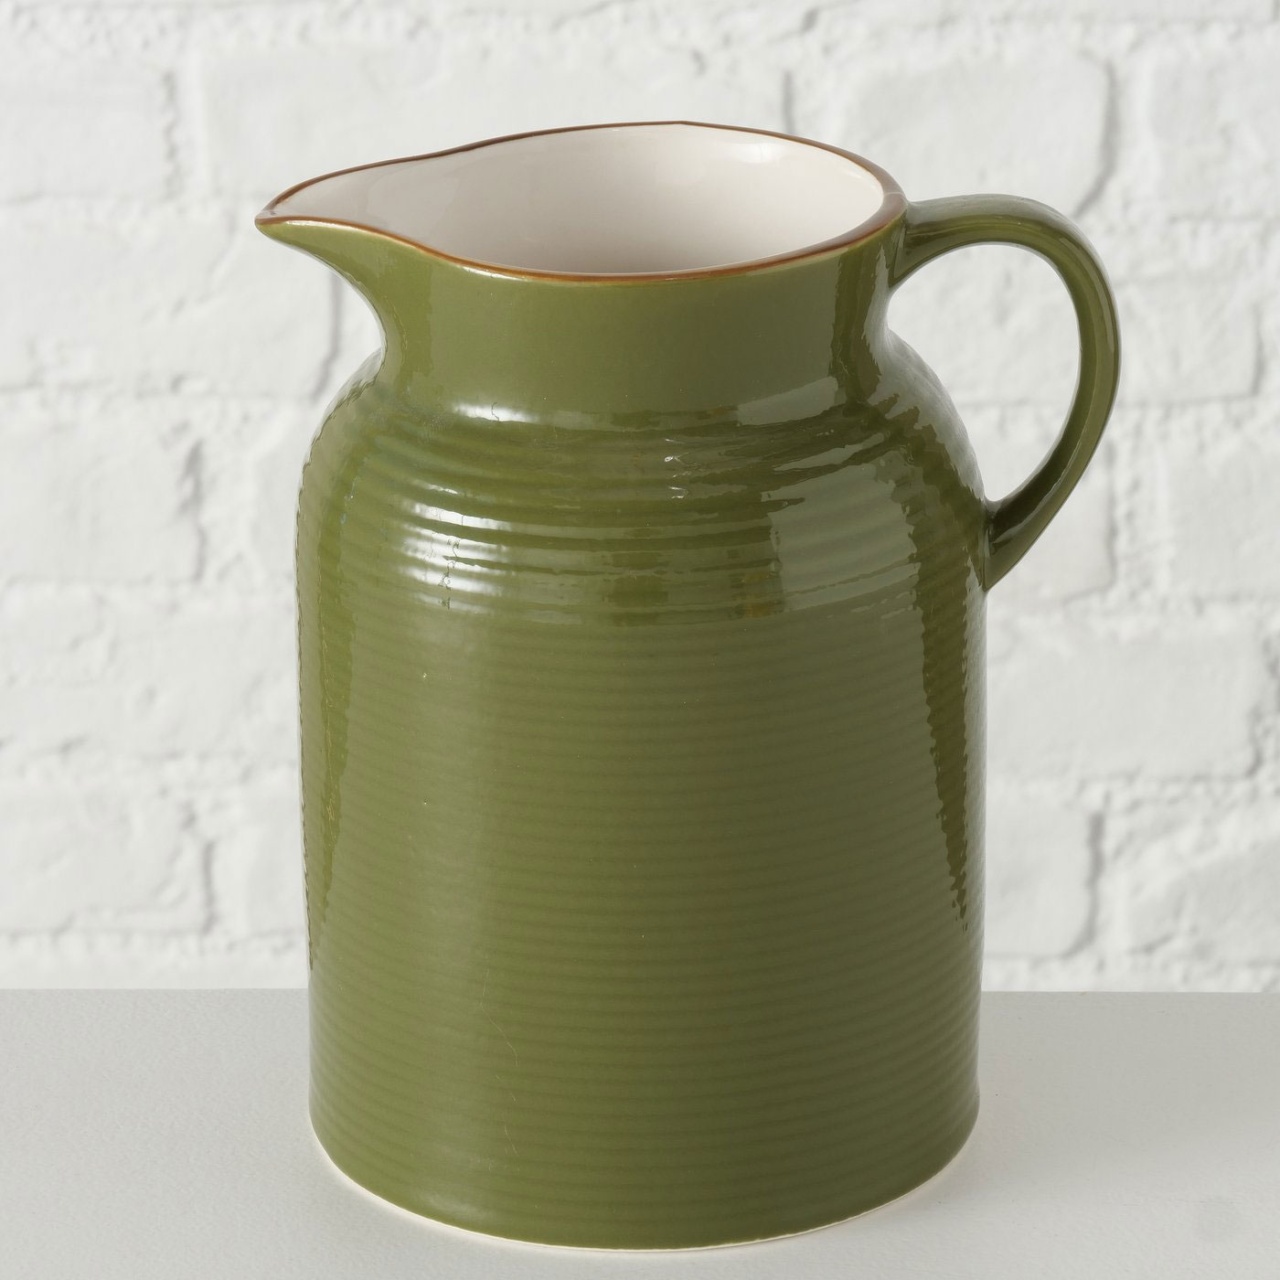 Krug Vase mediterran rustikal grün Keramik 2000 ml H 21cm